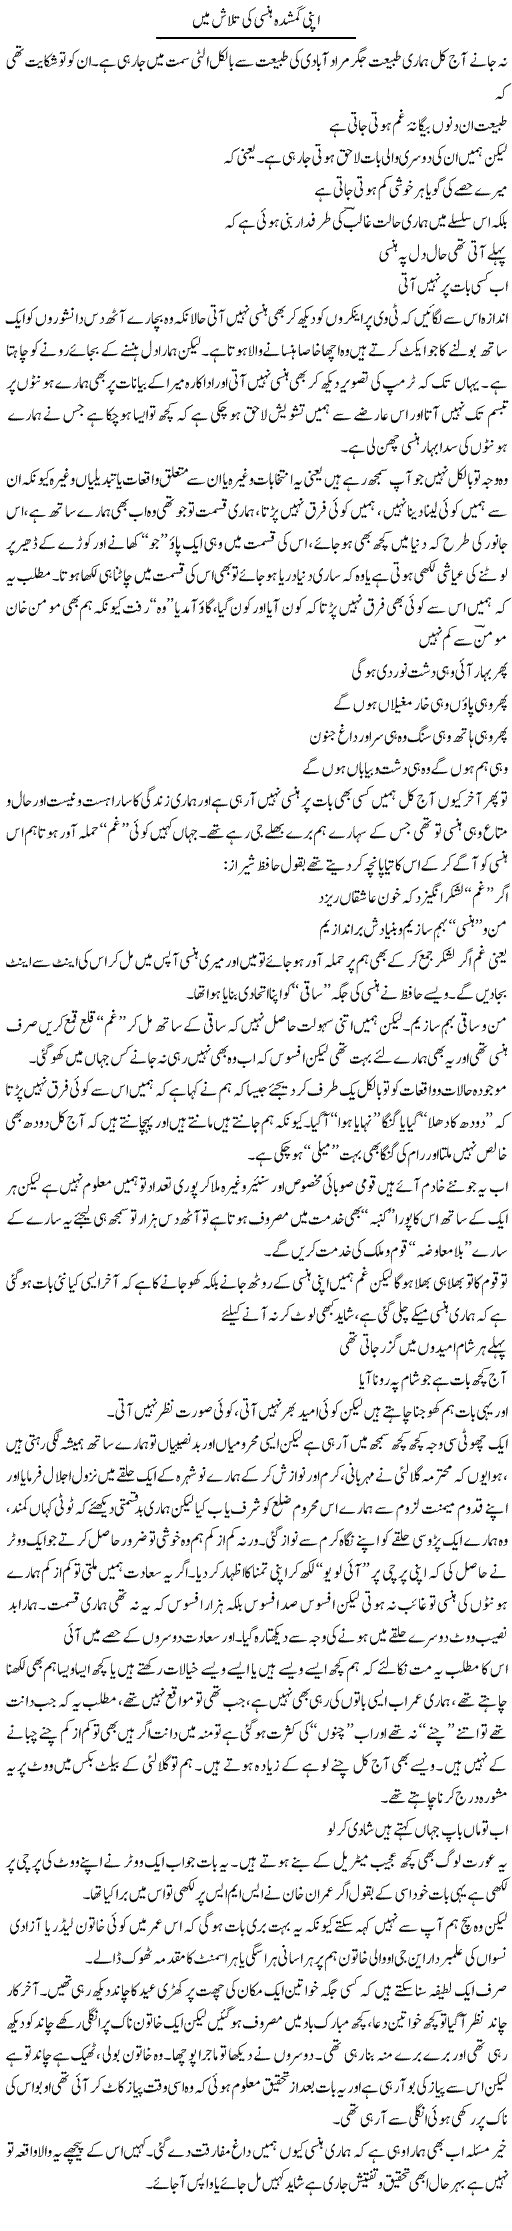 Apni Gumshuda Hansi Ki Yaad Mein | Saad Ullah Jan Barq | Daily Urdu Columns